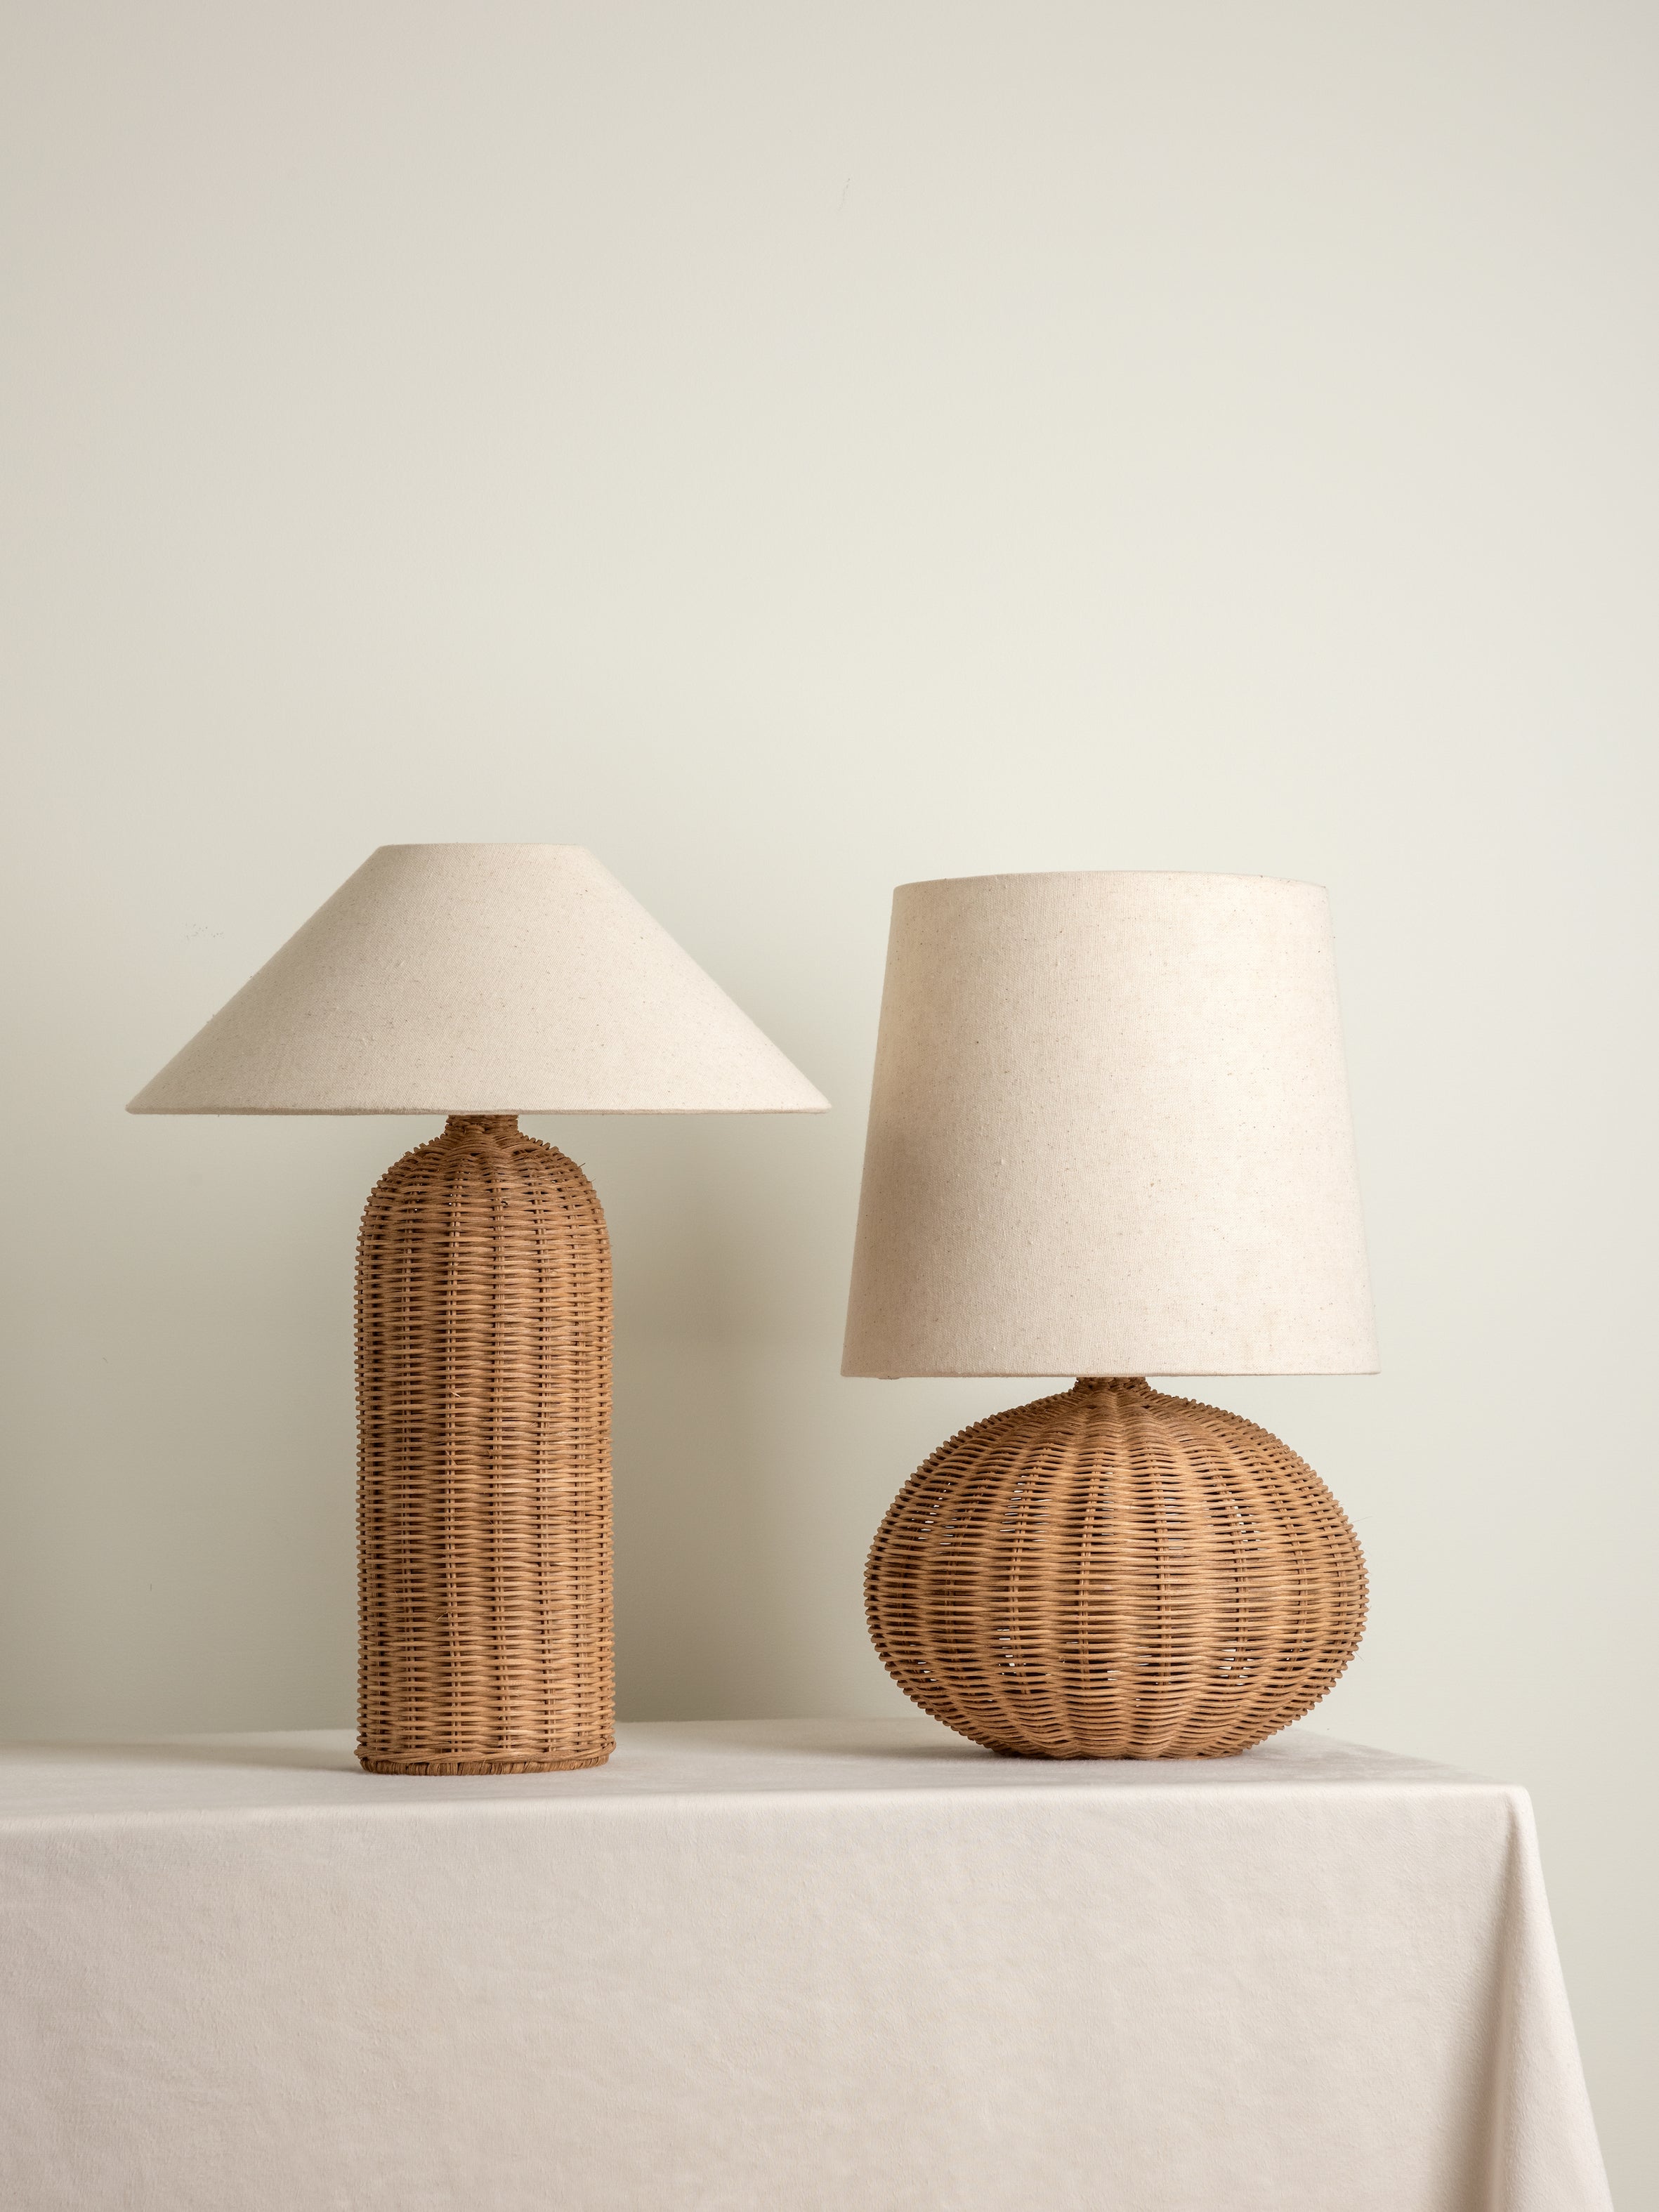 Ensia - tall rattan table lamp | Table Lamp | Lights & Lamps | UK